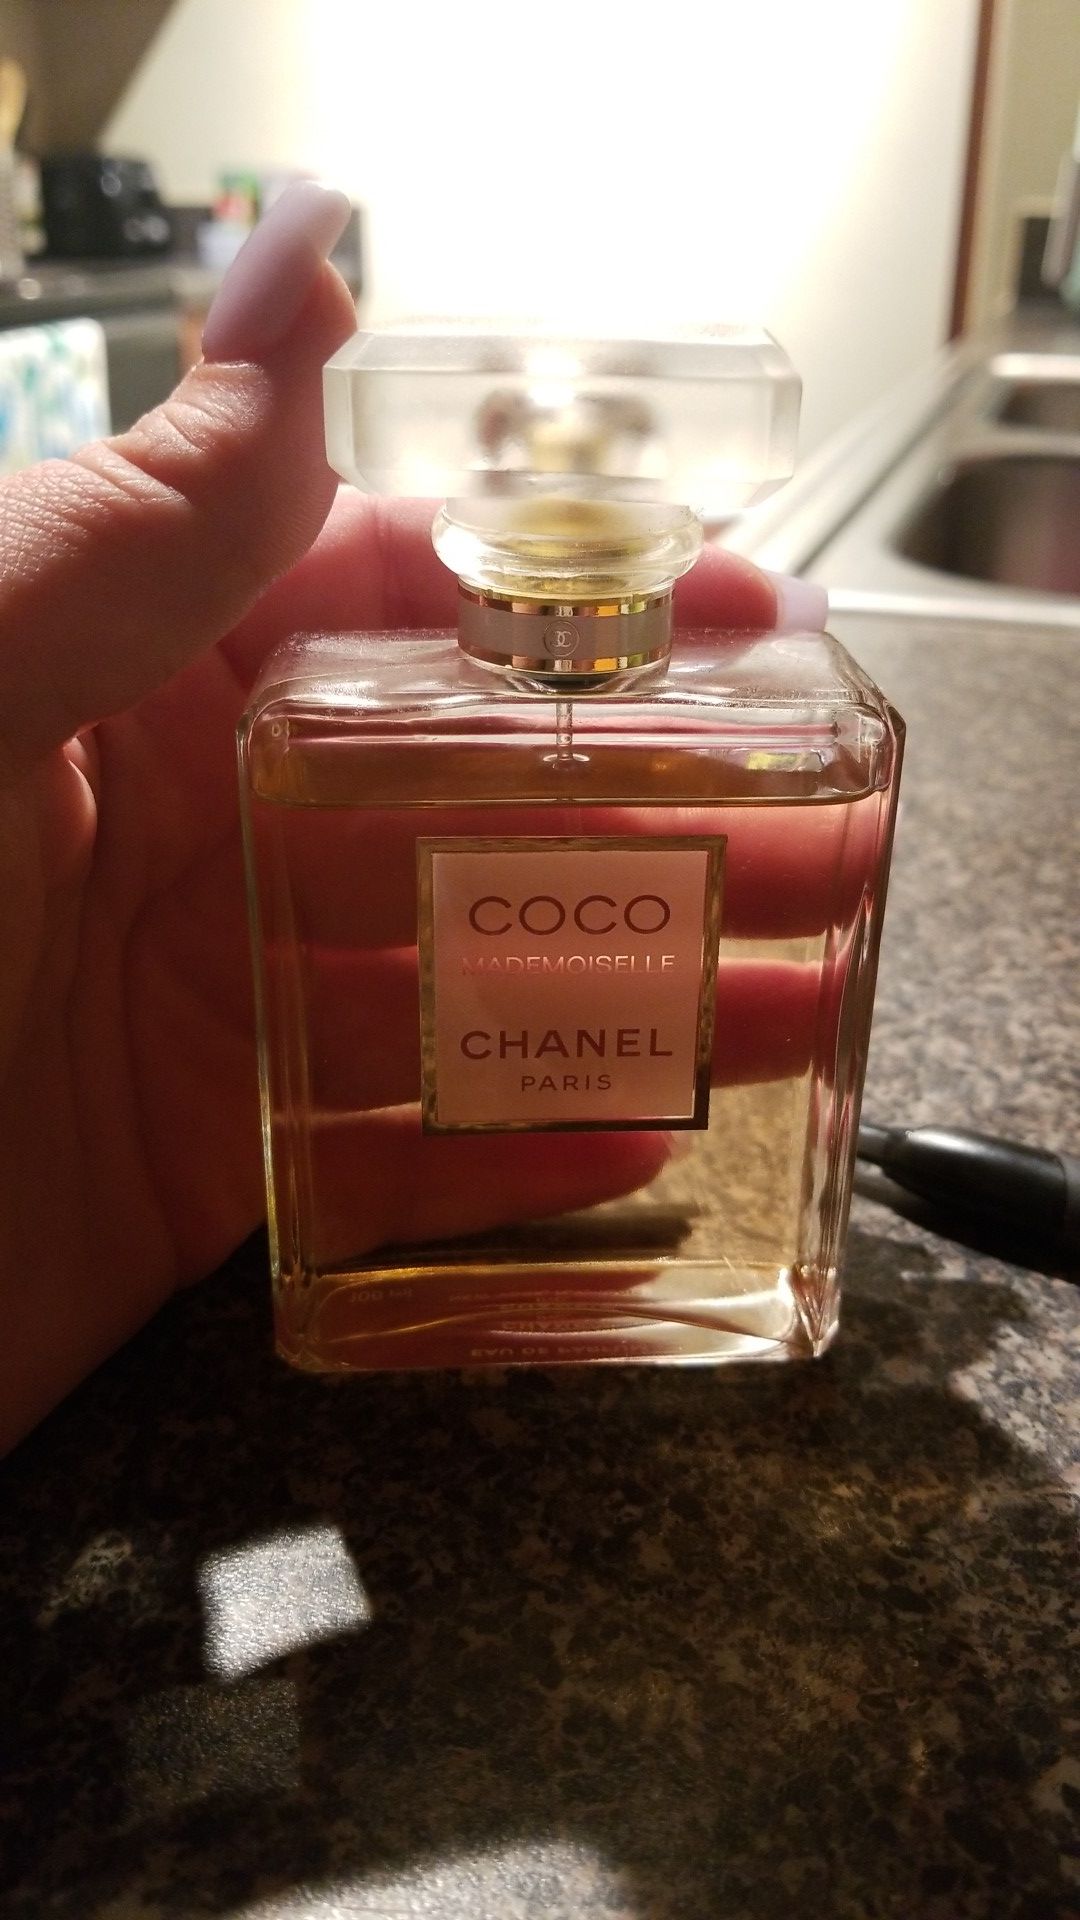 Coco chanel mademoiselle perfume